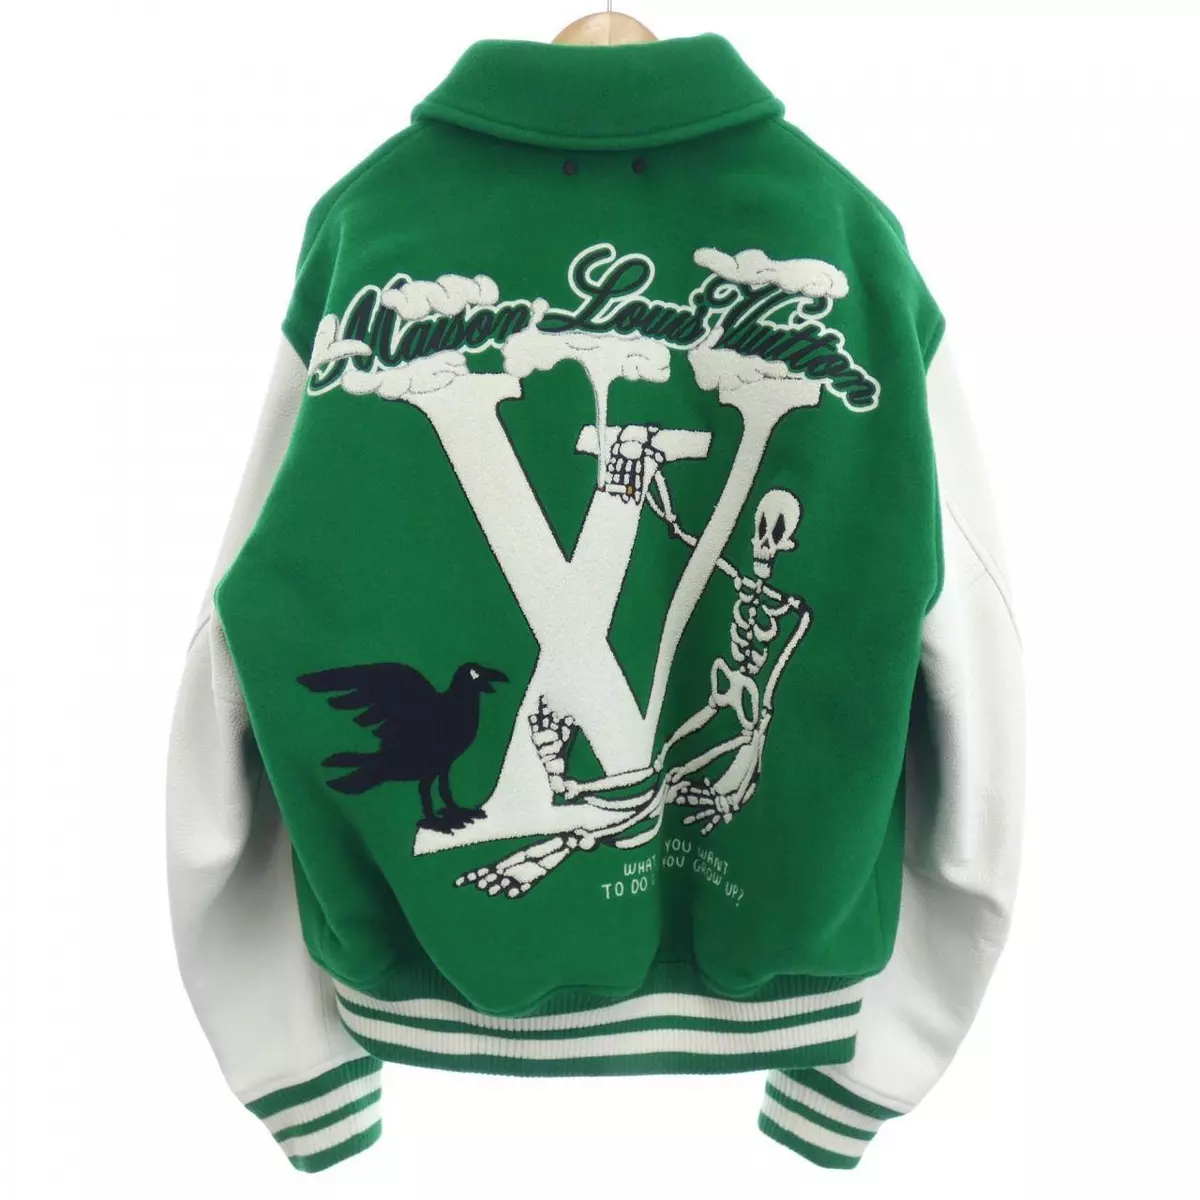 Authentic LOUIS VUITTON Varsity jacket #241-003-164-4117